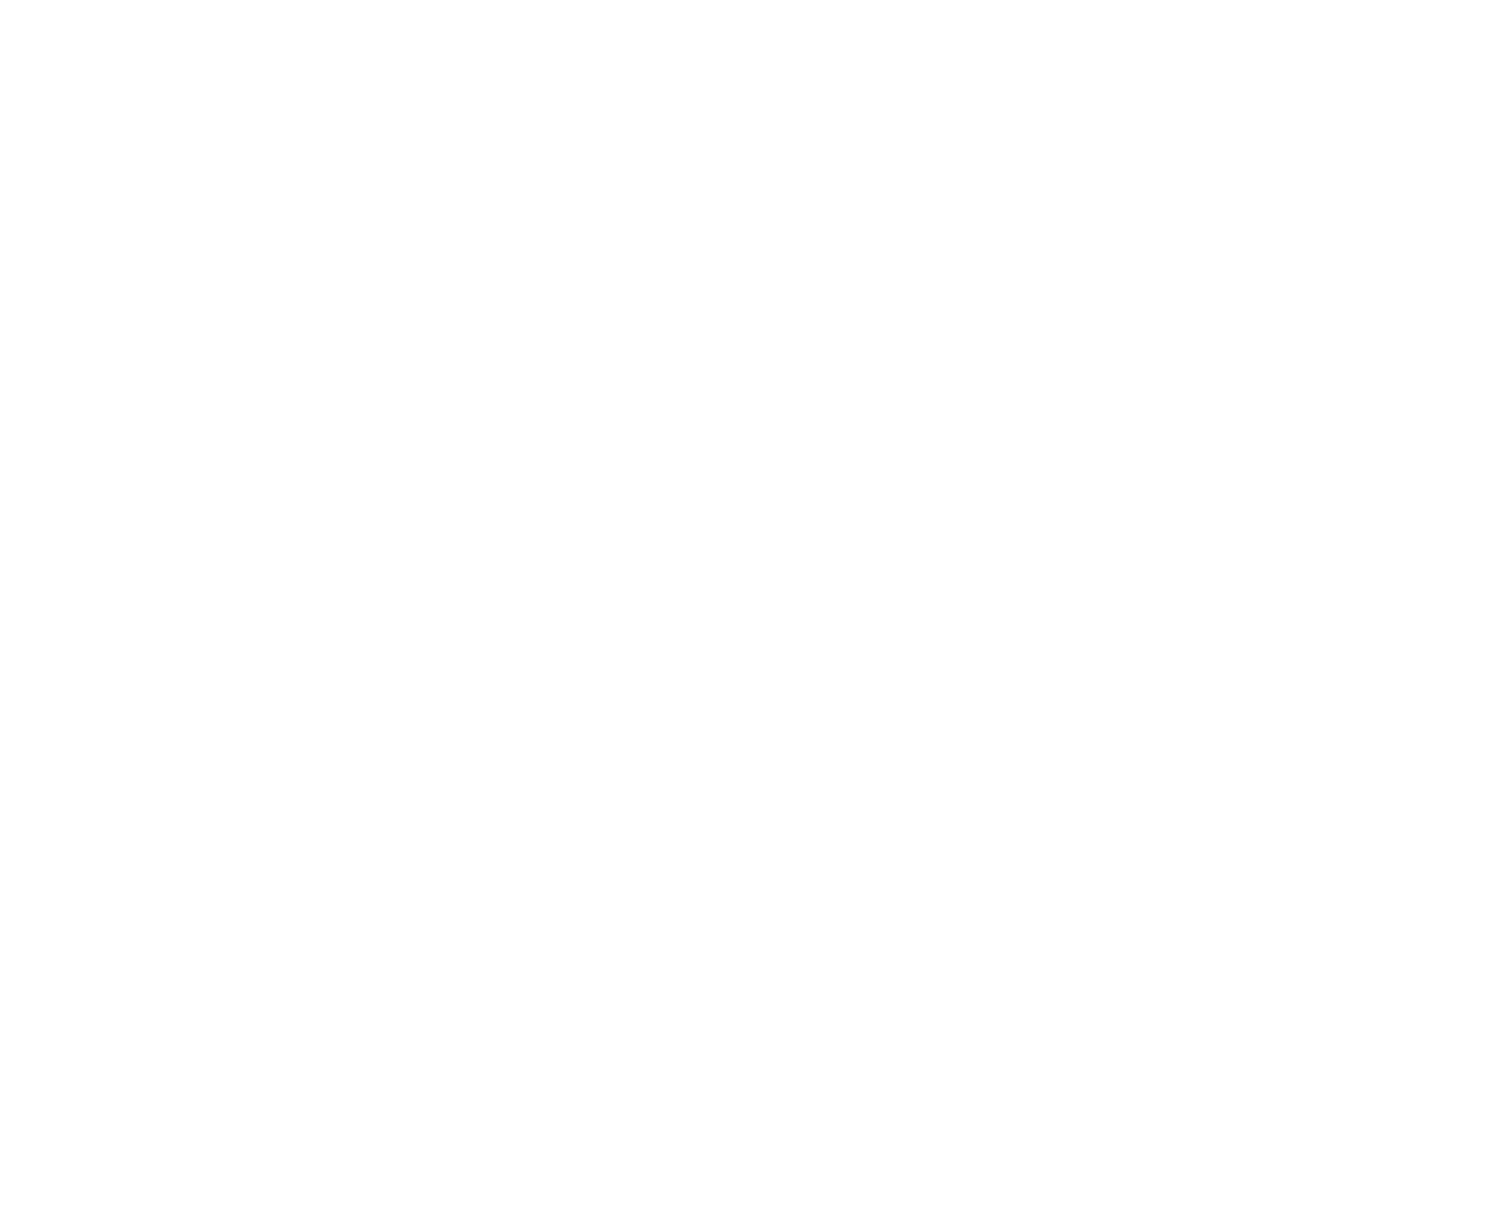 La Pequena Colombia Bakery  Restaurant Inc